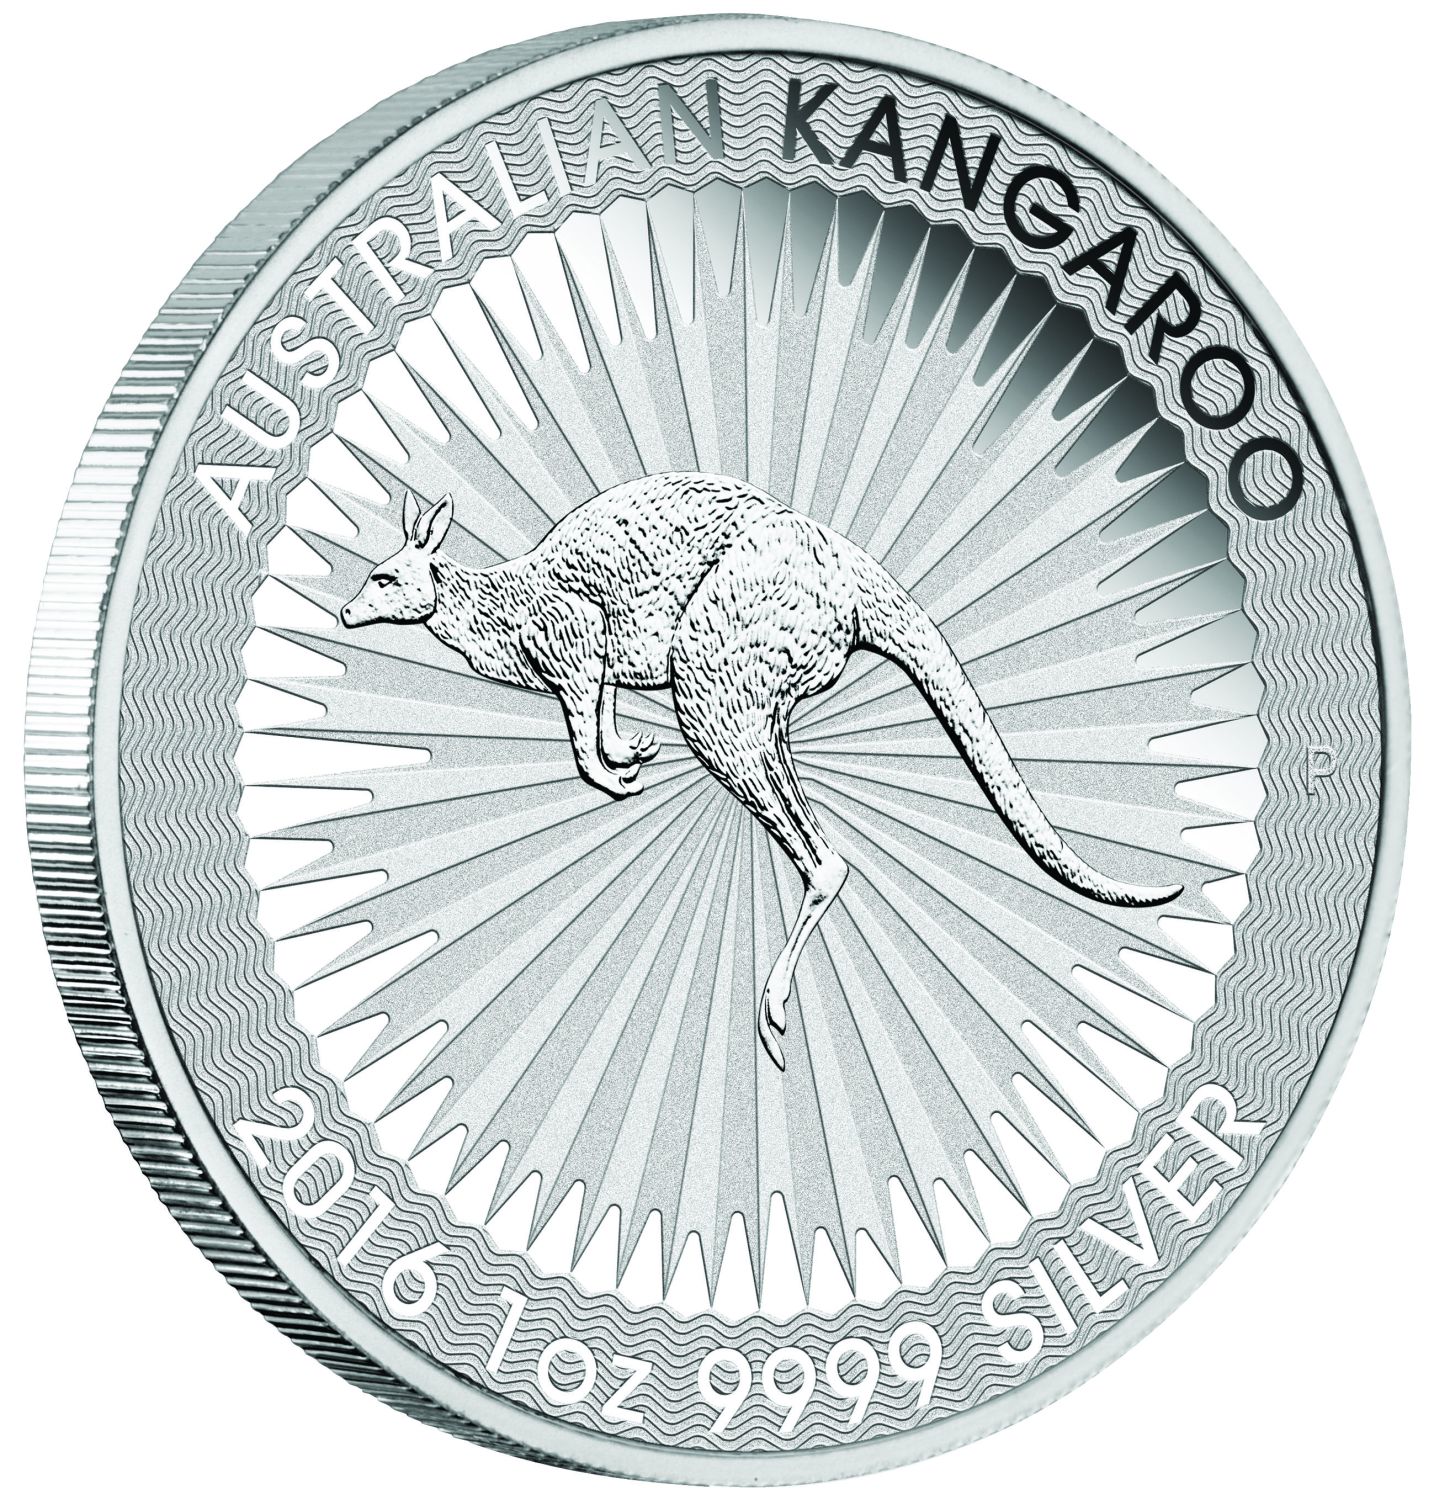 2016 1oz. Silver Australian Kangaroo bullion coin - reverse on edge